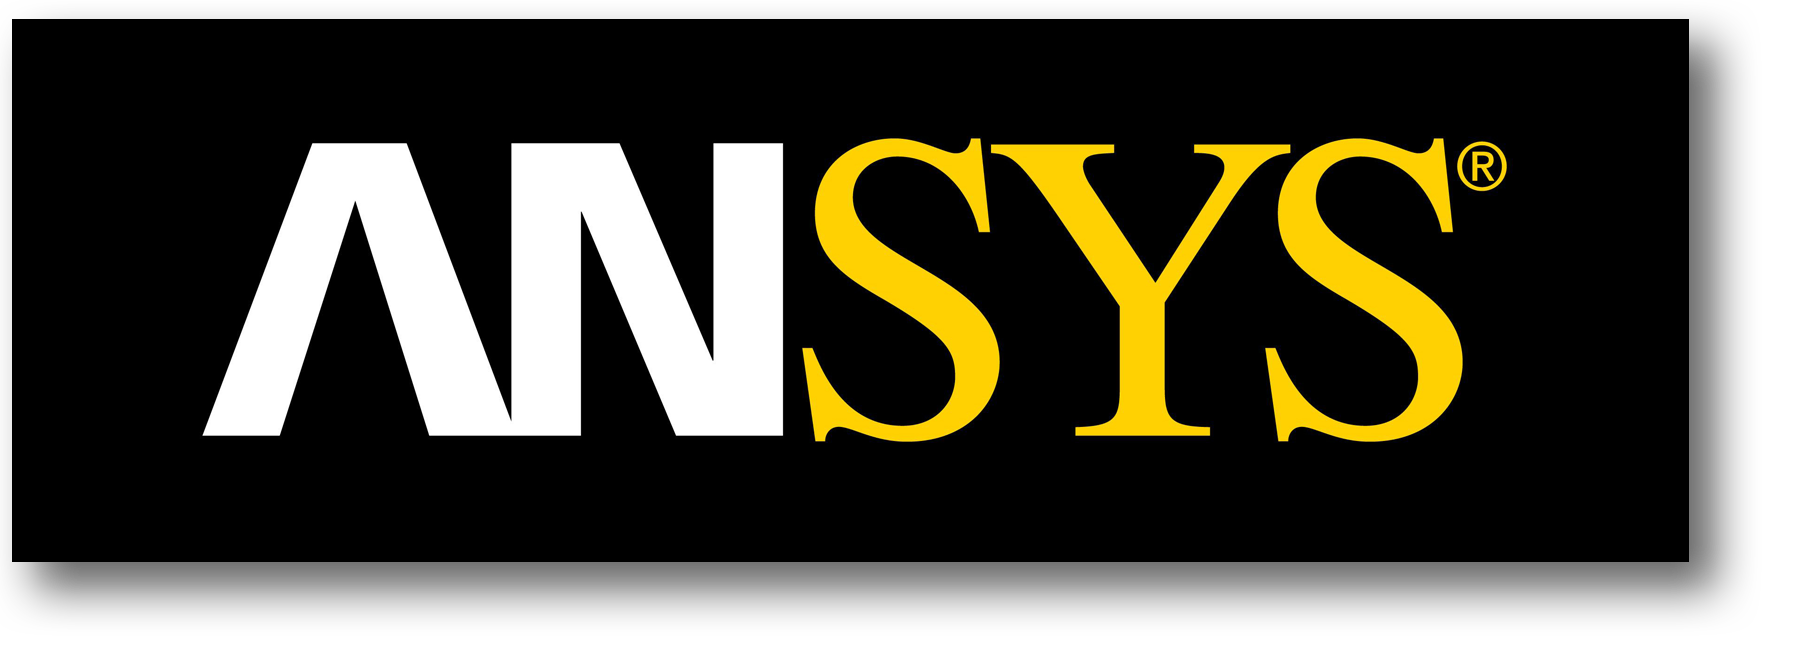 Anecsys Logo photo - 1